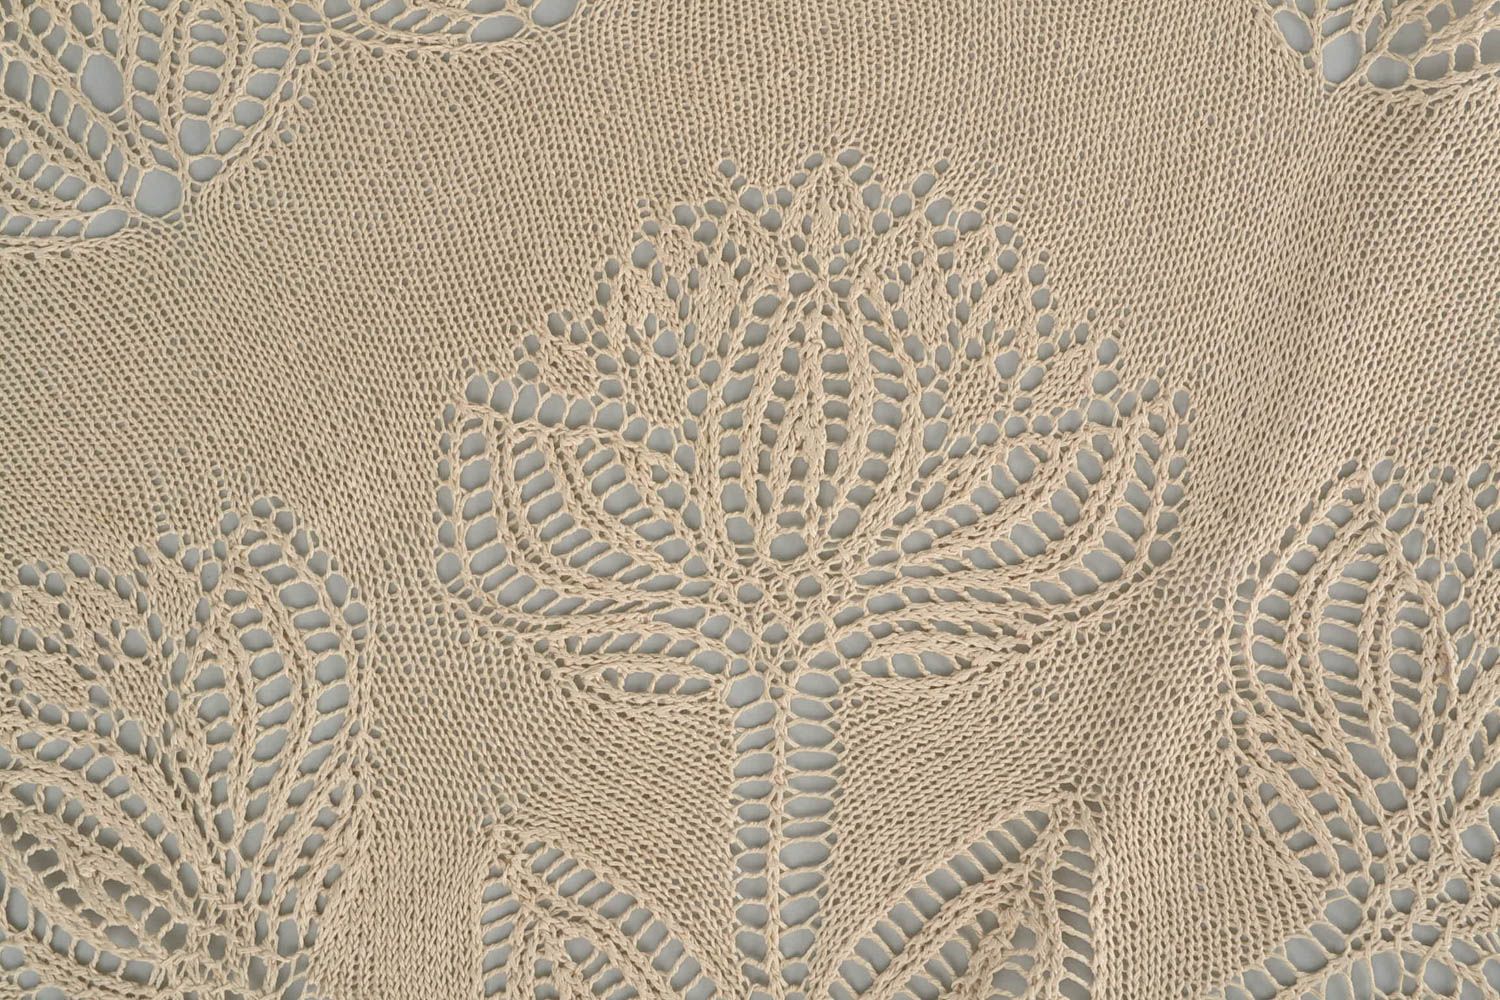 Handmade crochet napkin interior napkin for table home textiles decor ideas photo 4